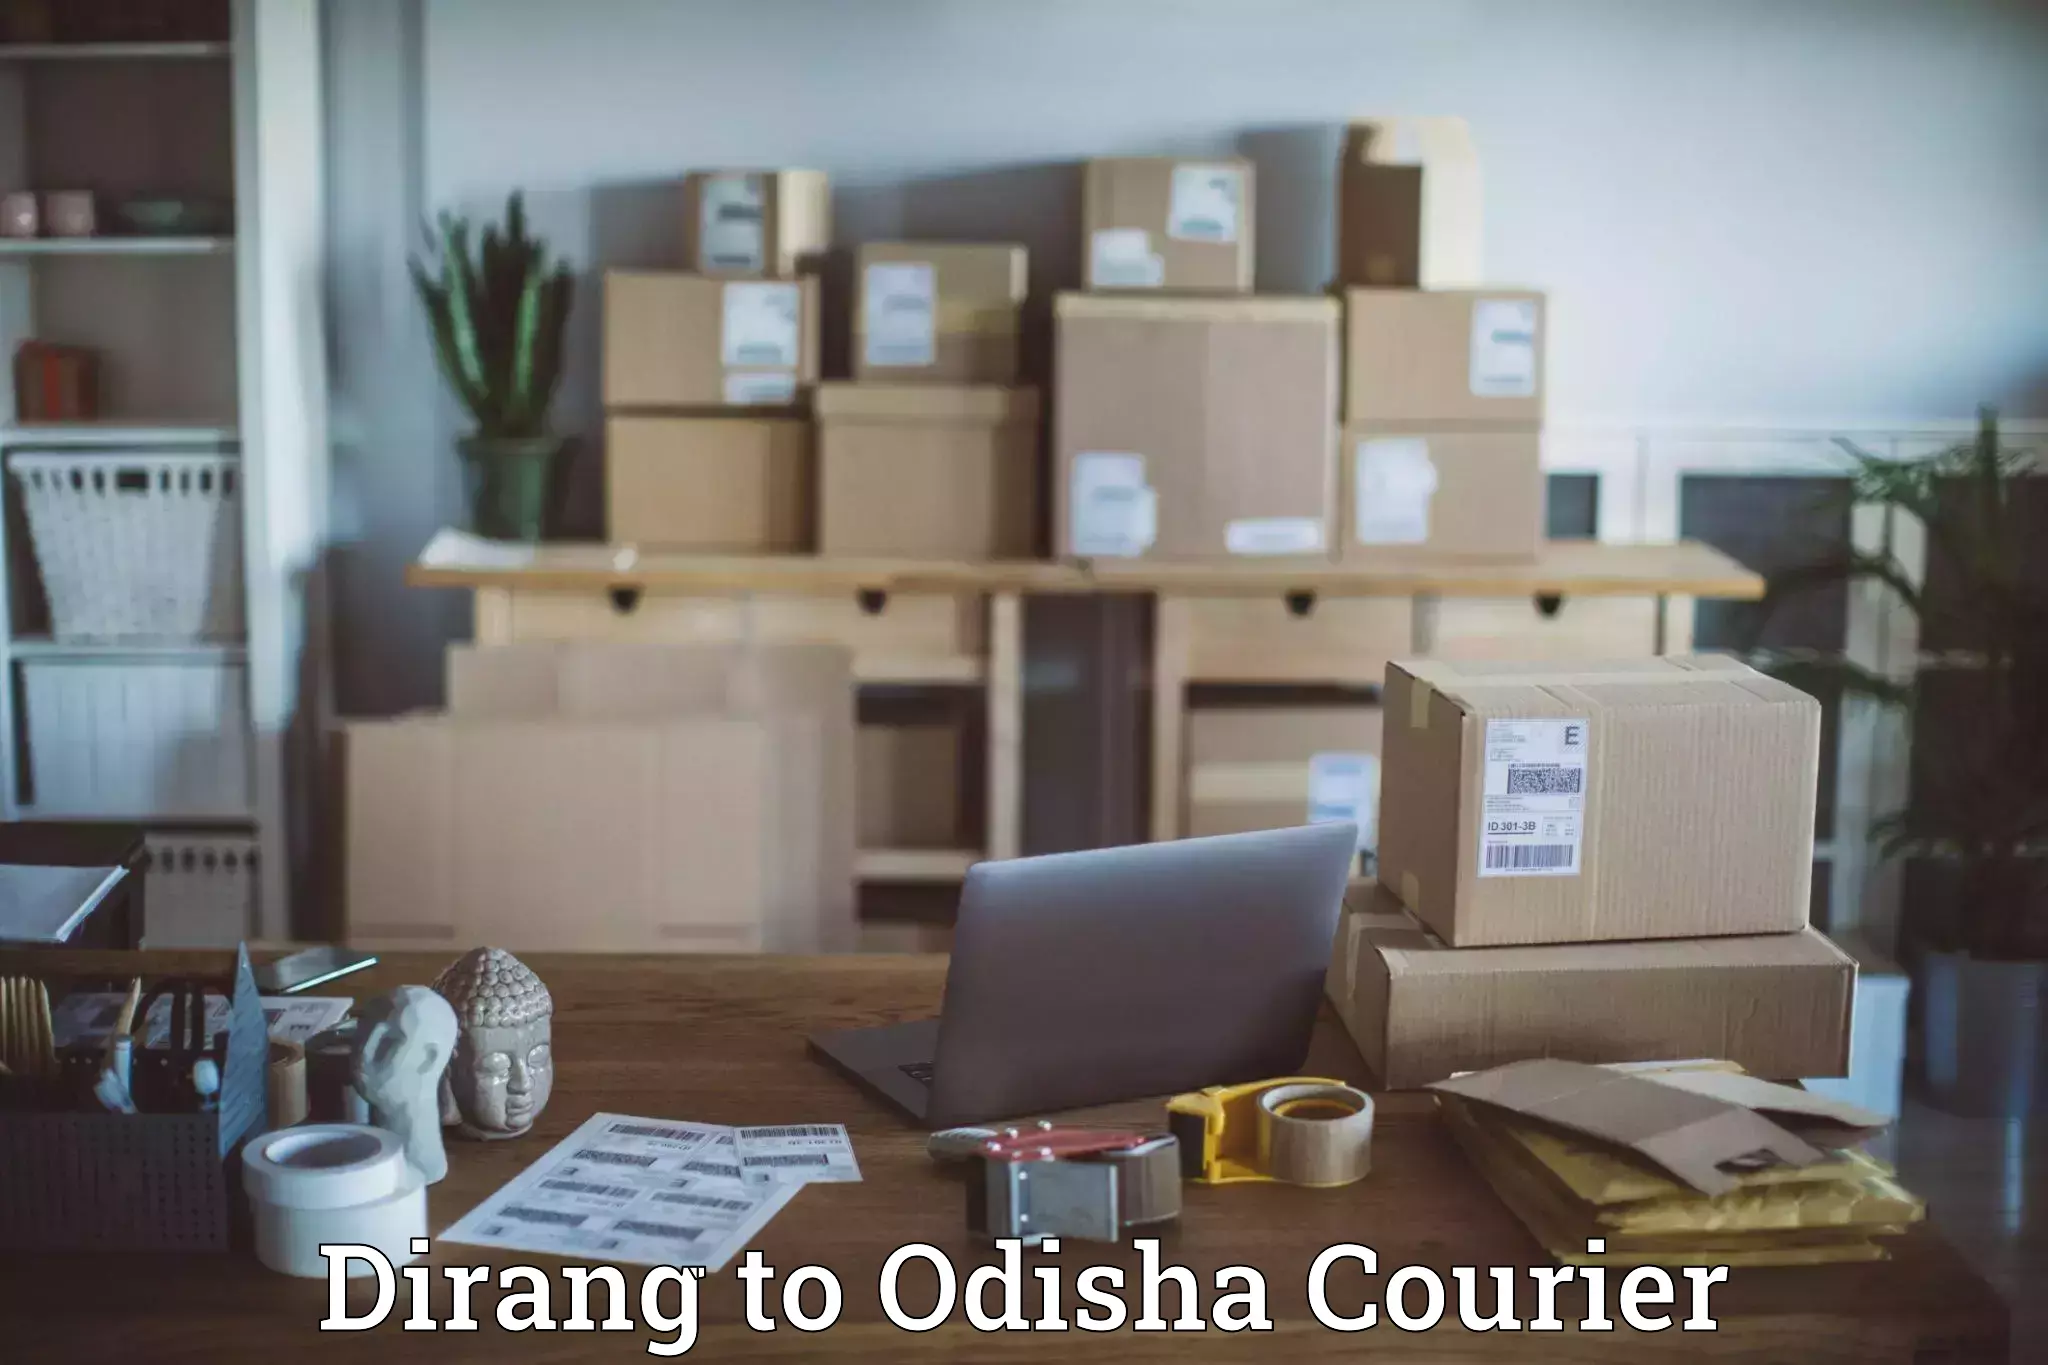 Courier service comparison Dirang to Kishorenagar